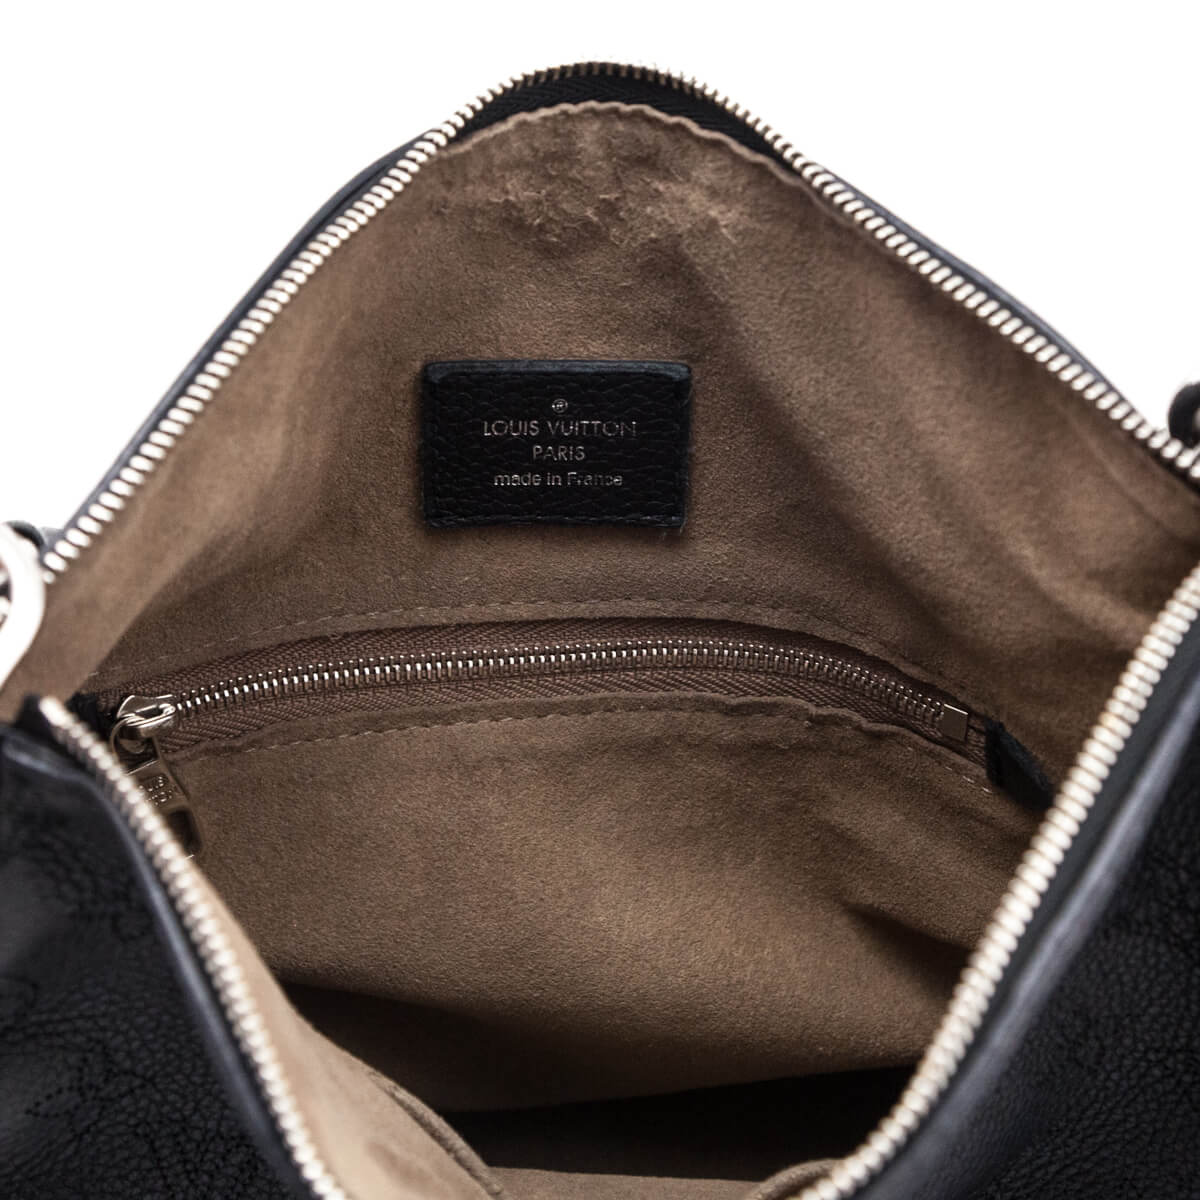 Louis Vuitton Black Mahina Babylone PM Bag ○ Labellov ○ Buy and